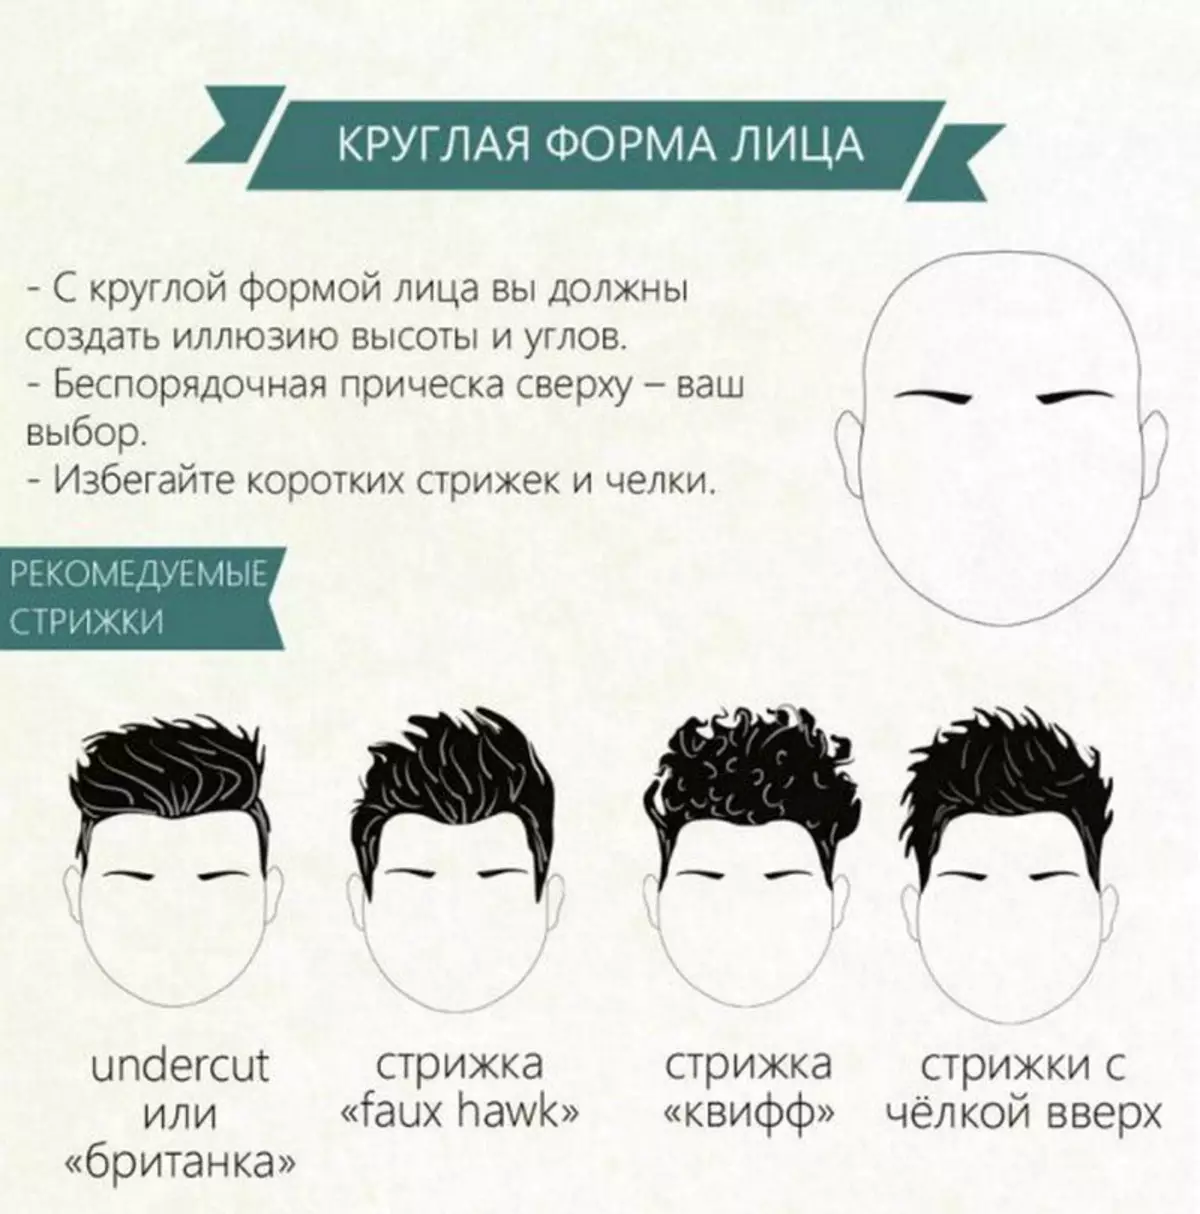 Стрижка по форме лица и типу волос для мужчин